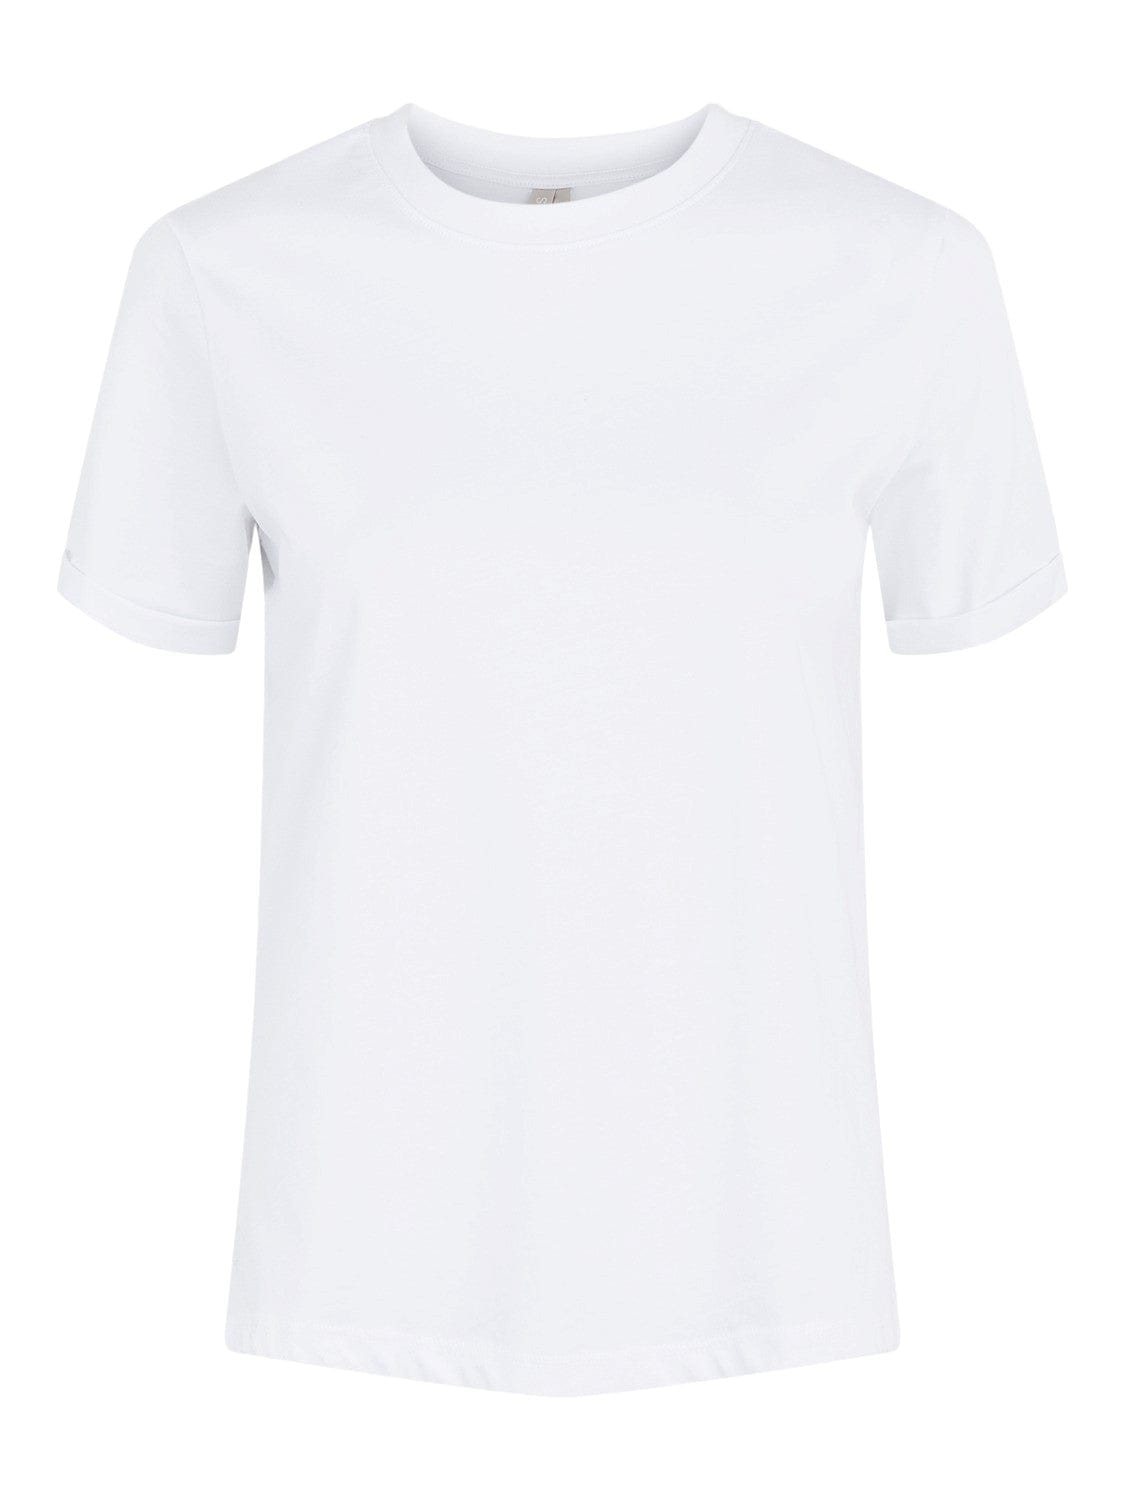 Se PIECES - Ria Oversize T-Shirt - Hvid hos stilkompagniet.dk